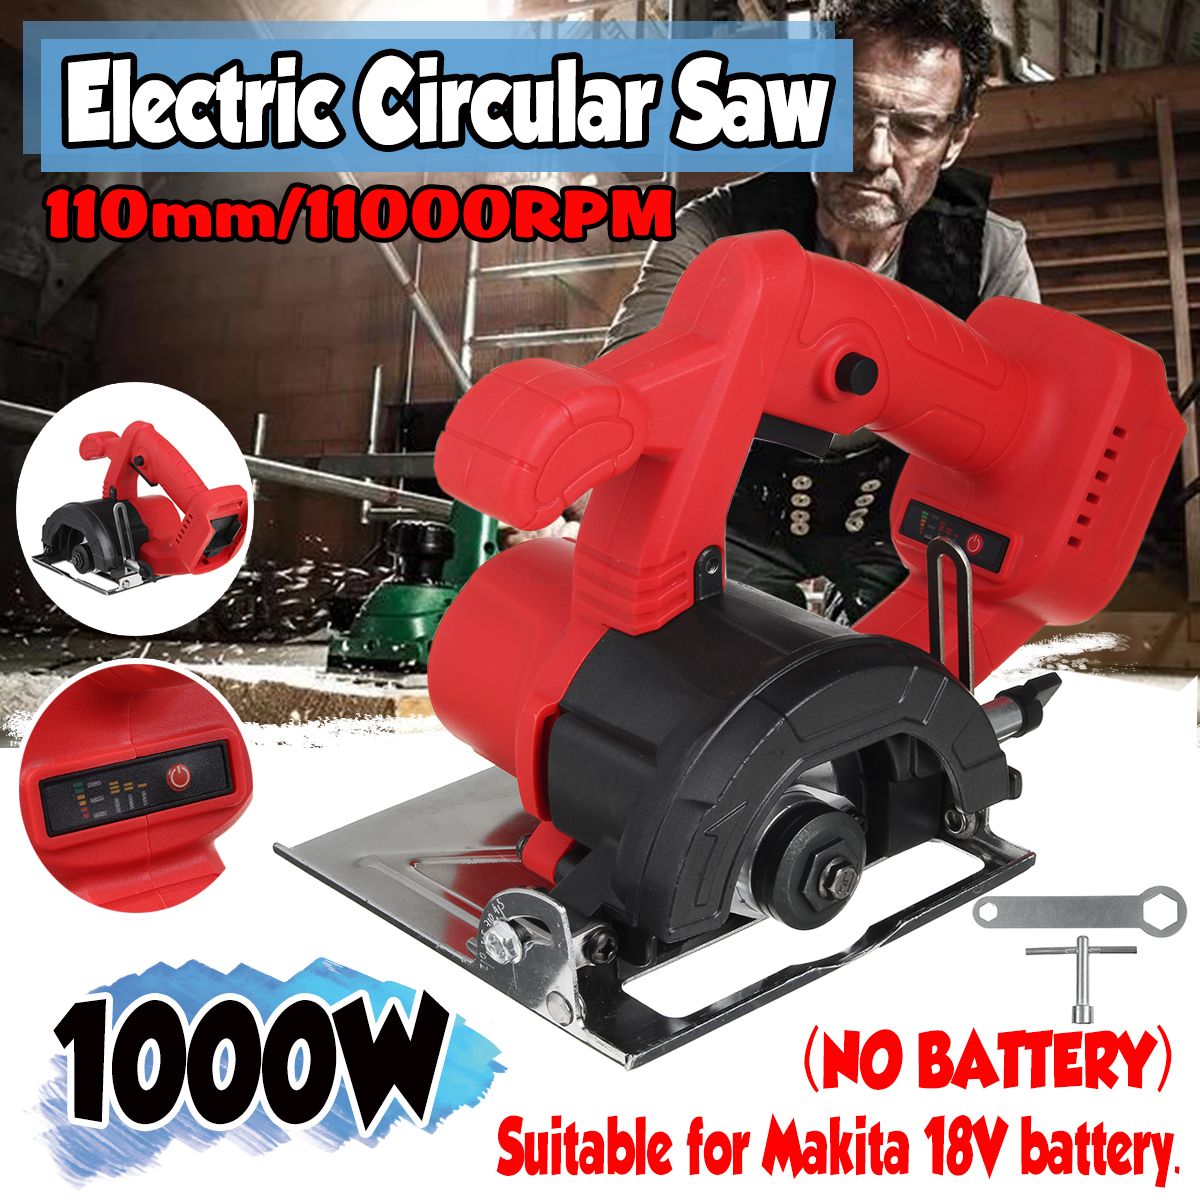 1000W-Cordless-Circular-Saw-Handheld-Powerful-Cutting-Saw-For-Makita-18v-Battery-1757801